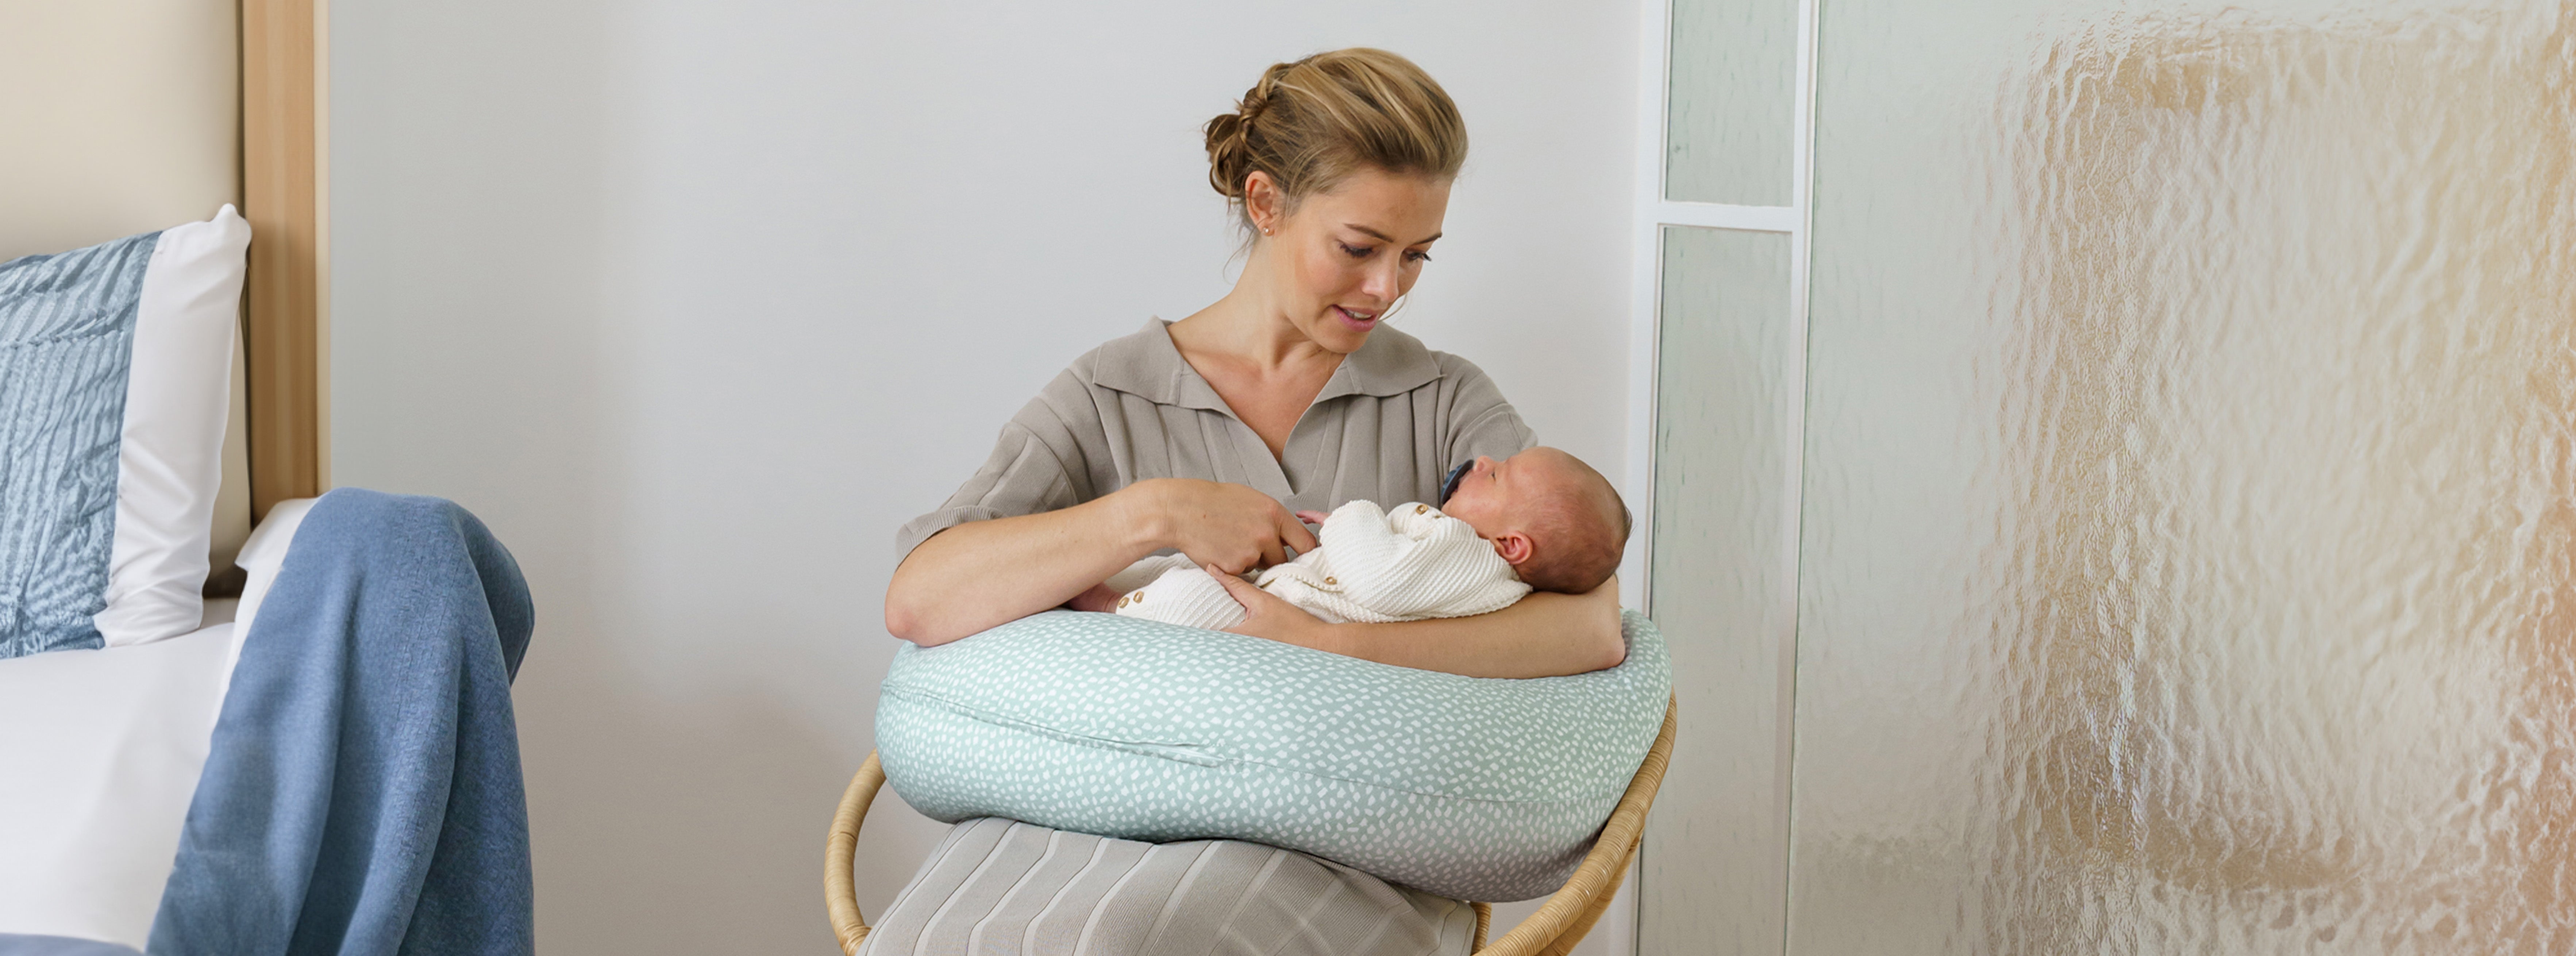 mum smiling at newborn baby nursing on pregnancy nursing pillow in bedroom